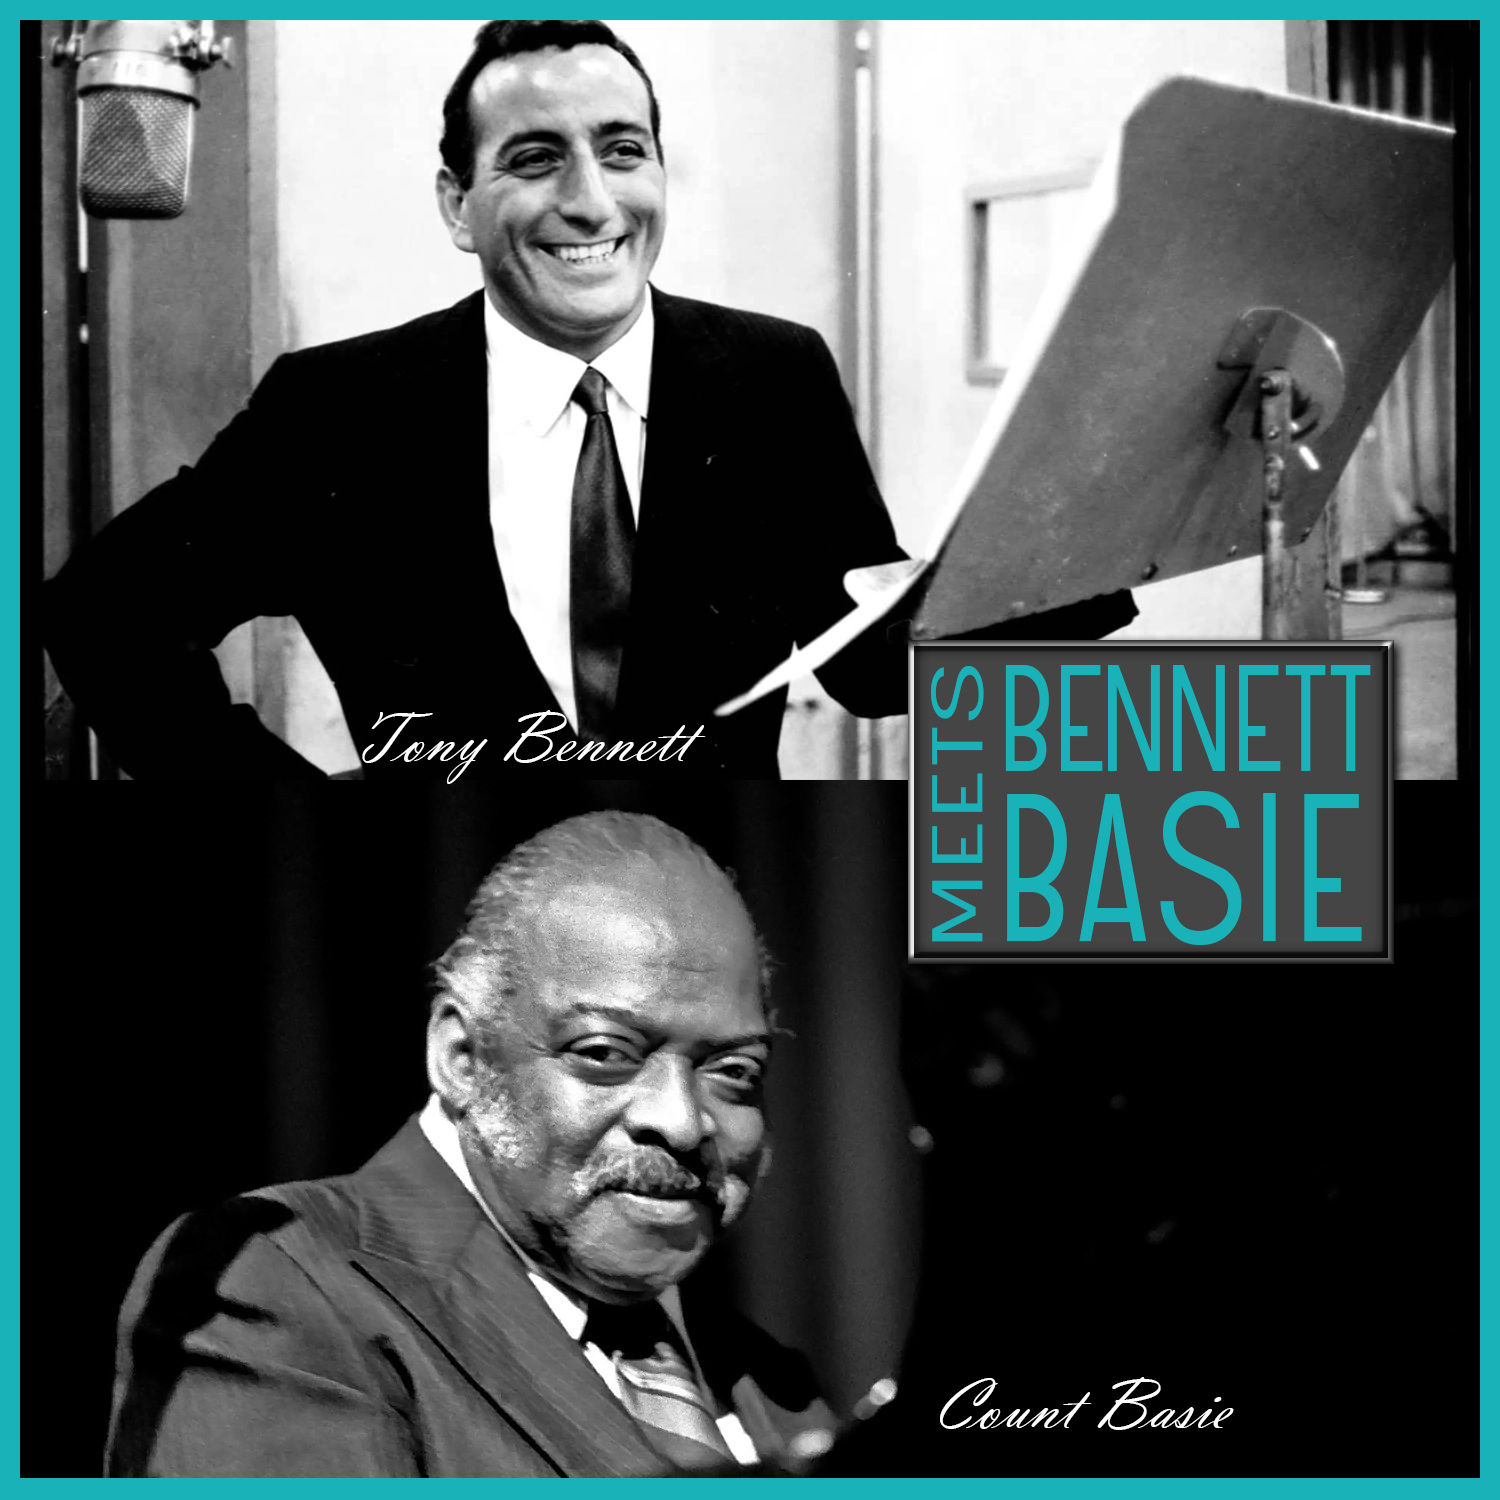 Bennett Meets Basie by Count Basie